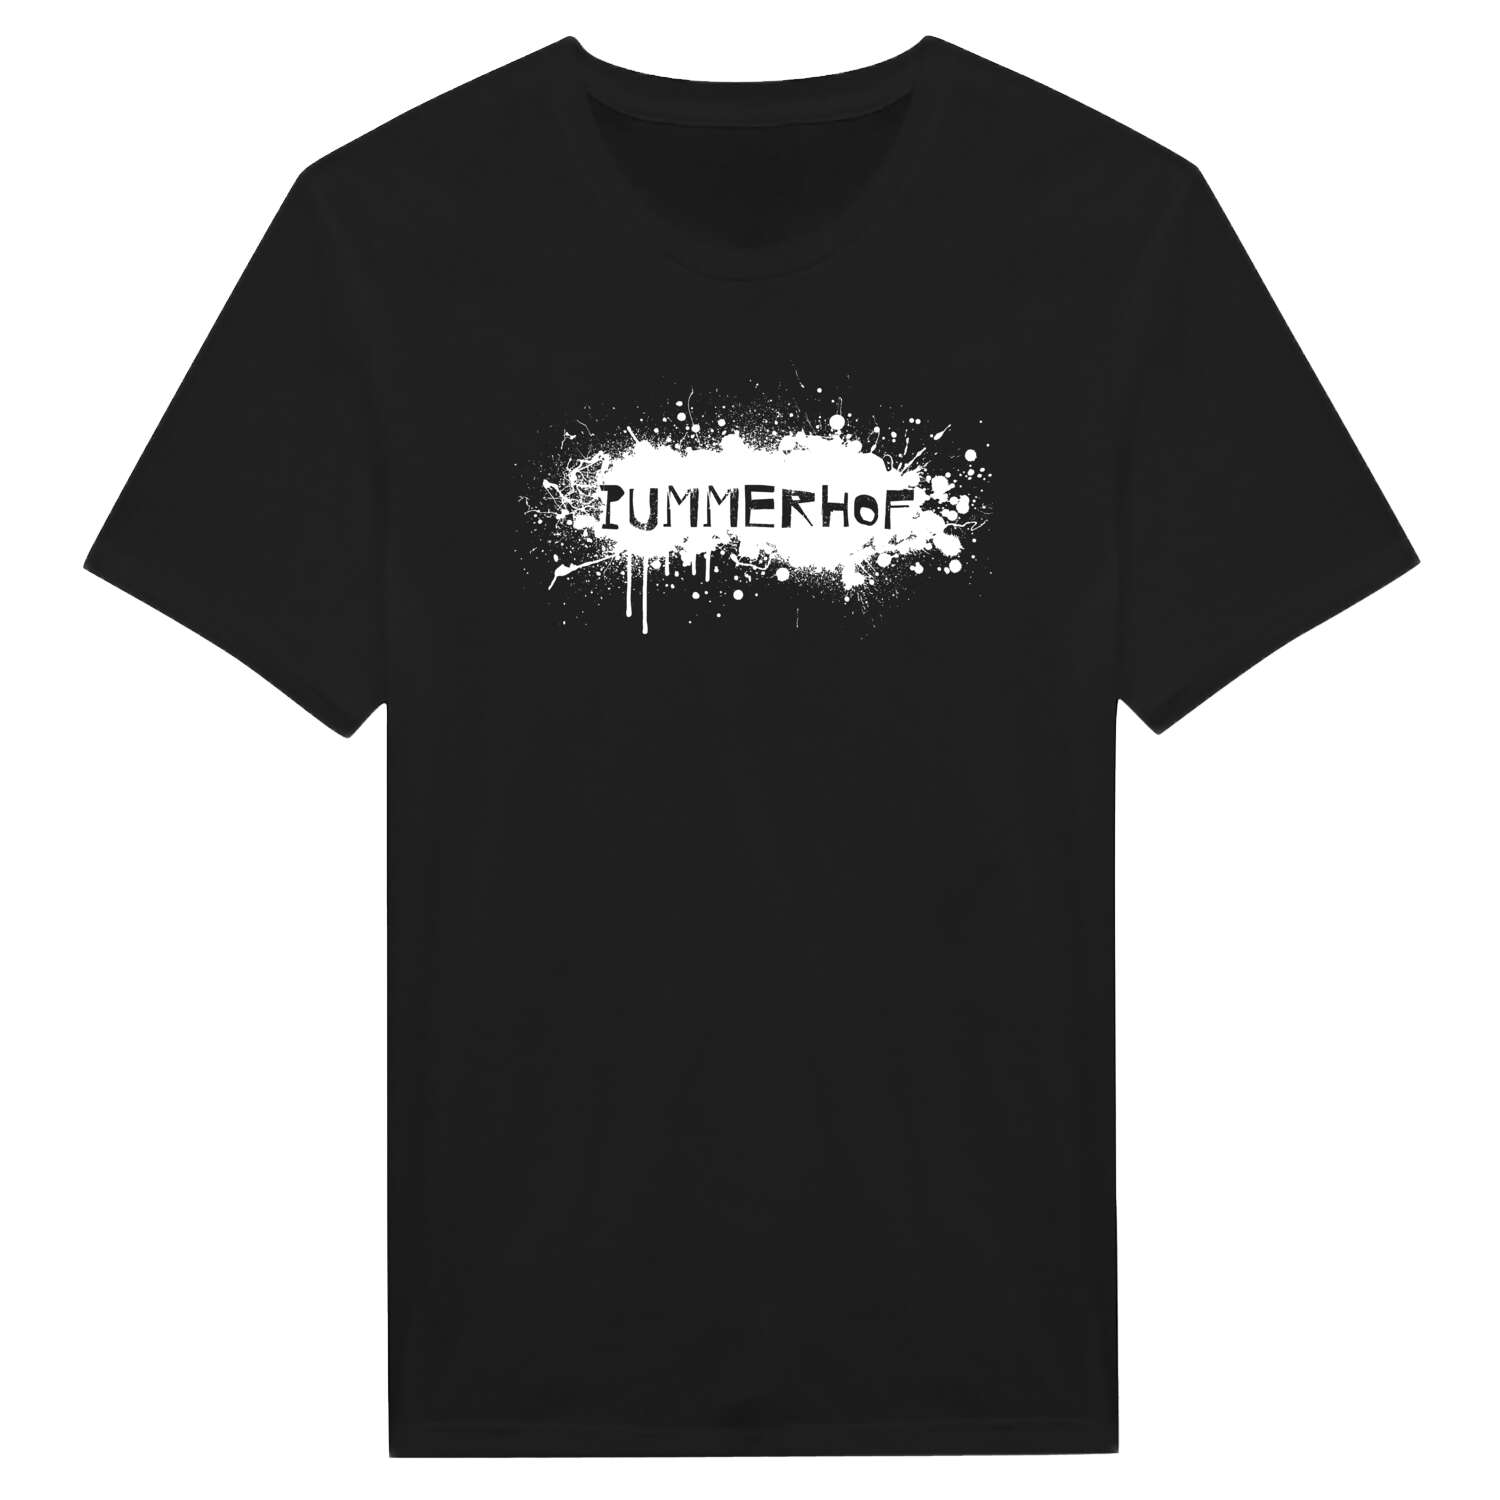 Pummerhof T-Shirt »Paint Splash Punk«